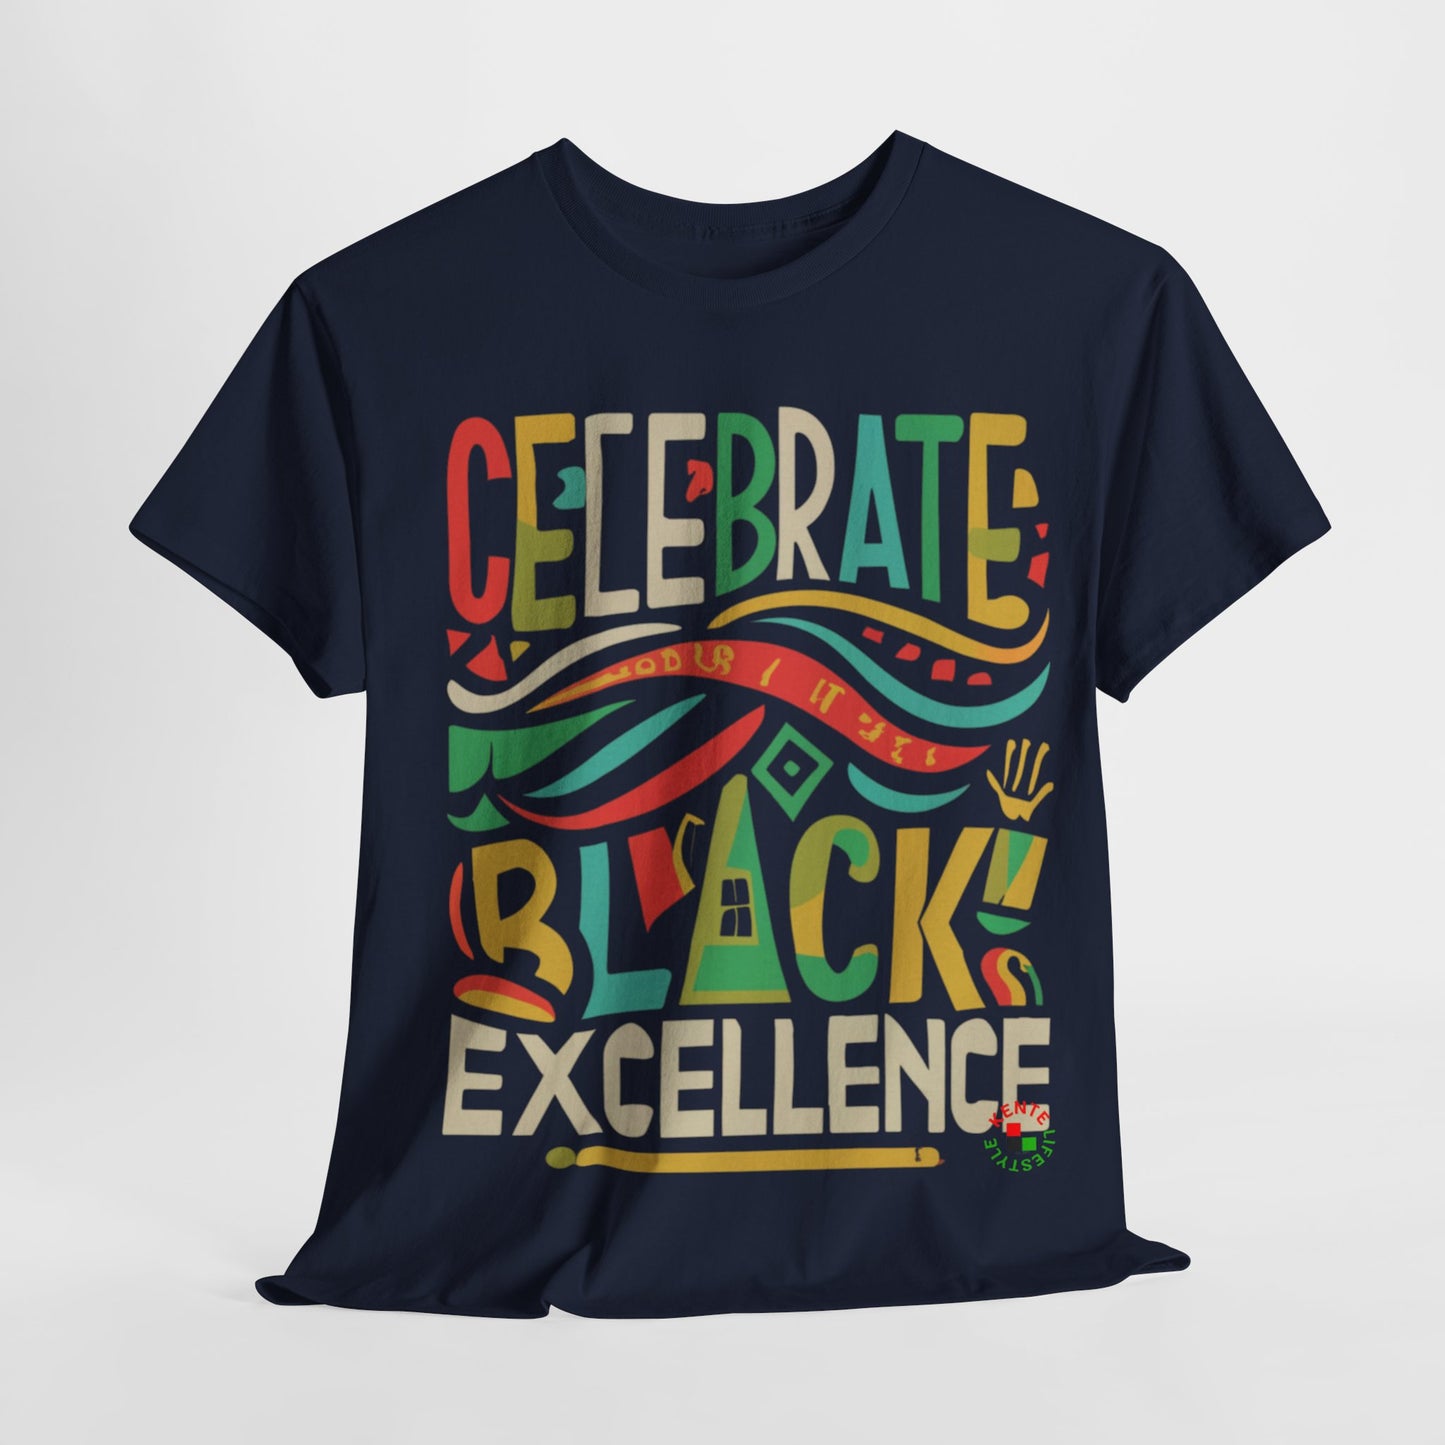 Celebrate Black Excellence - T-shirt